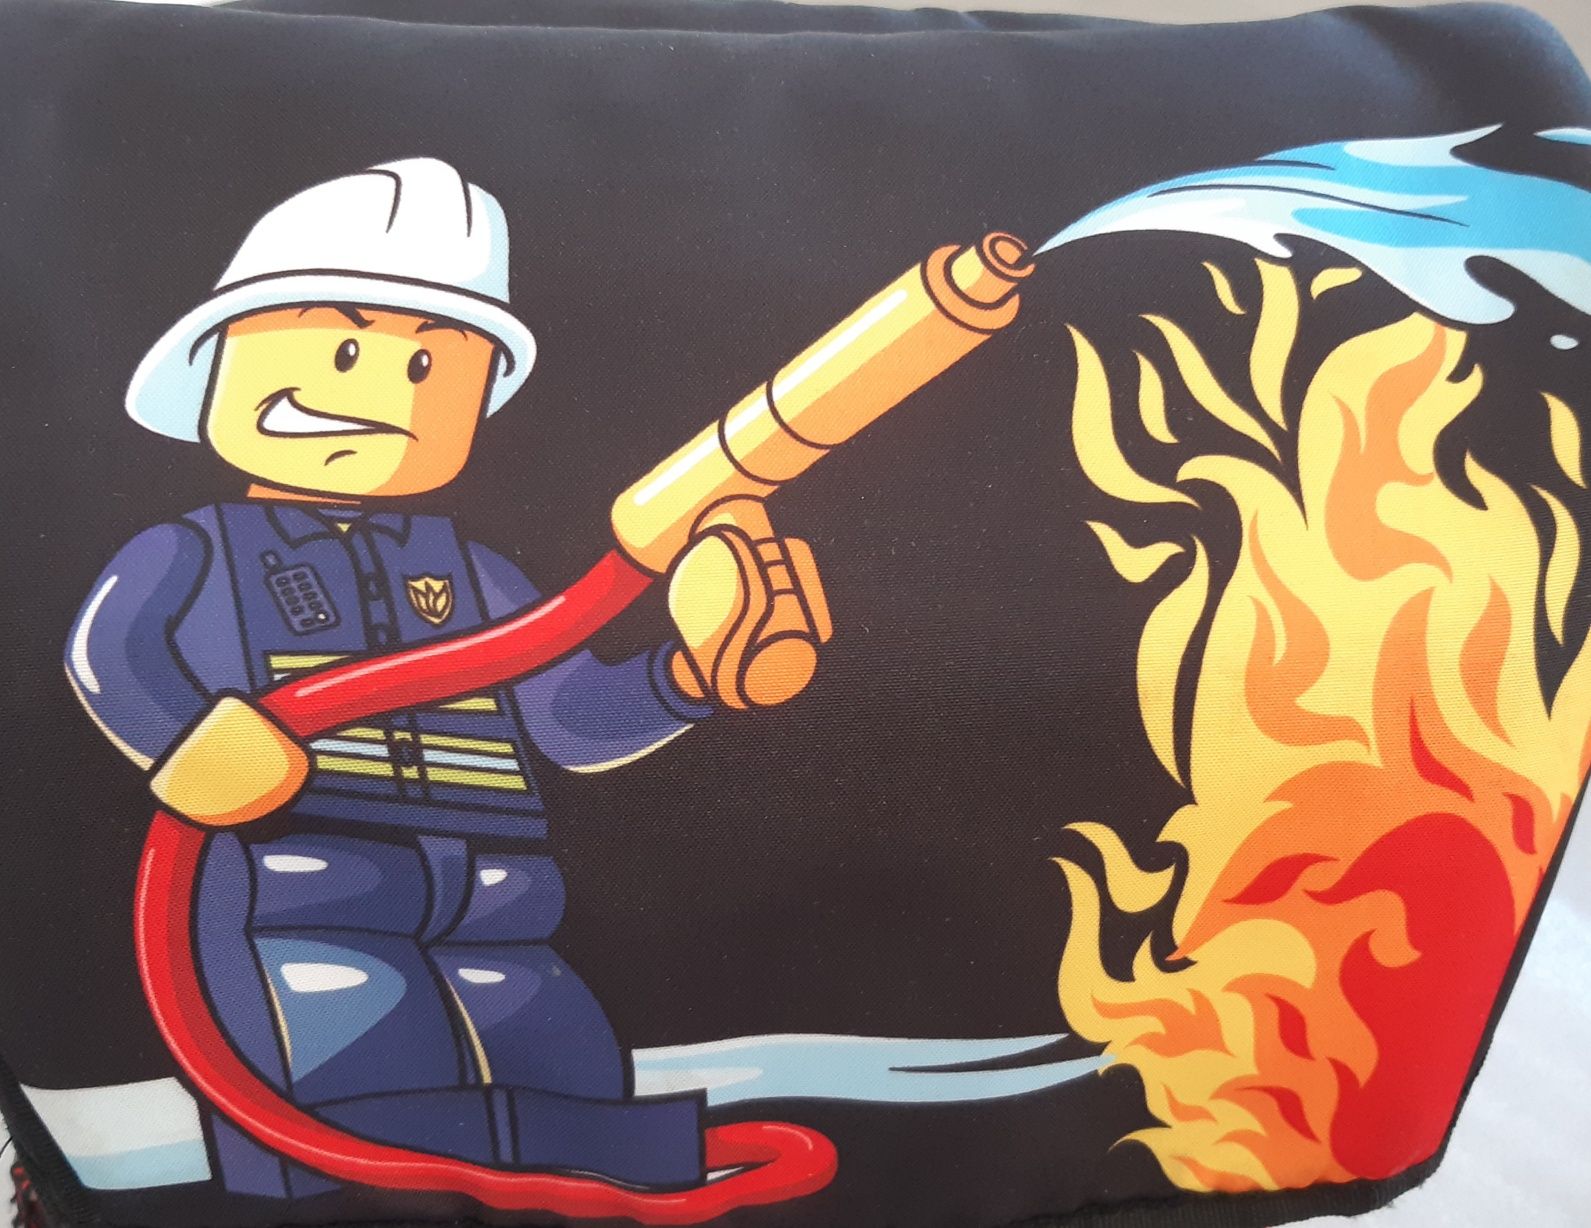 Tornister plecak 1-3 lego city strażak straż pożarna worek na wf